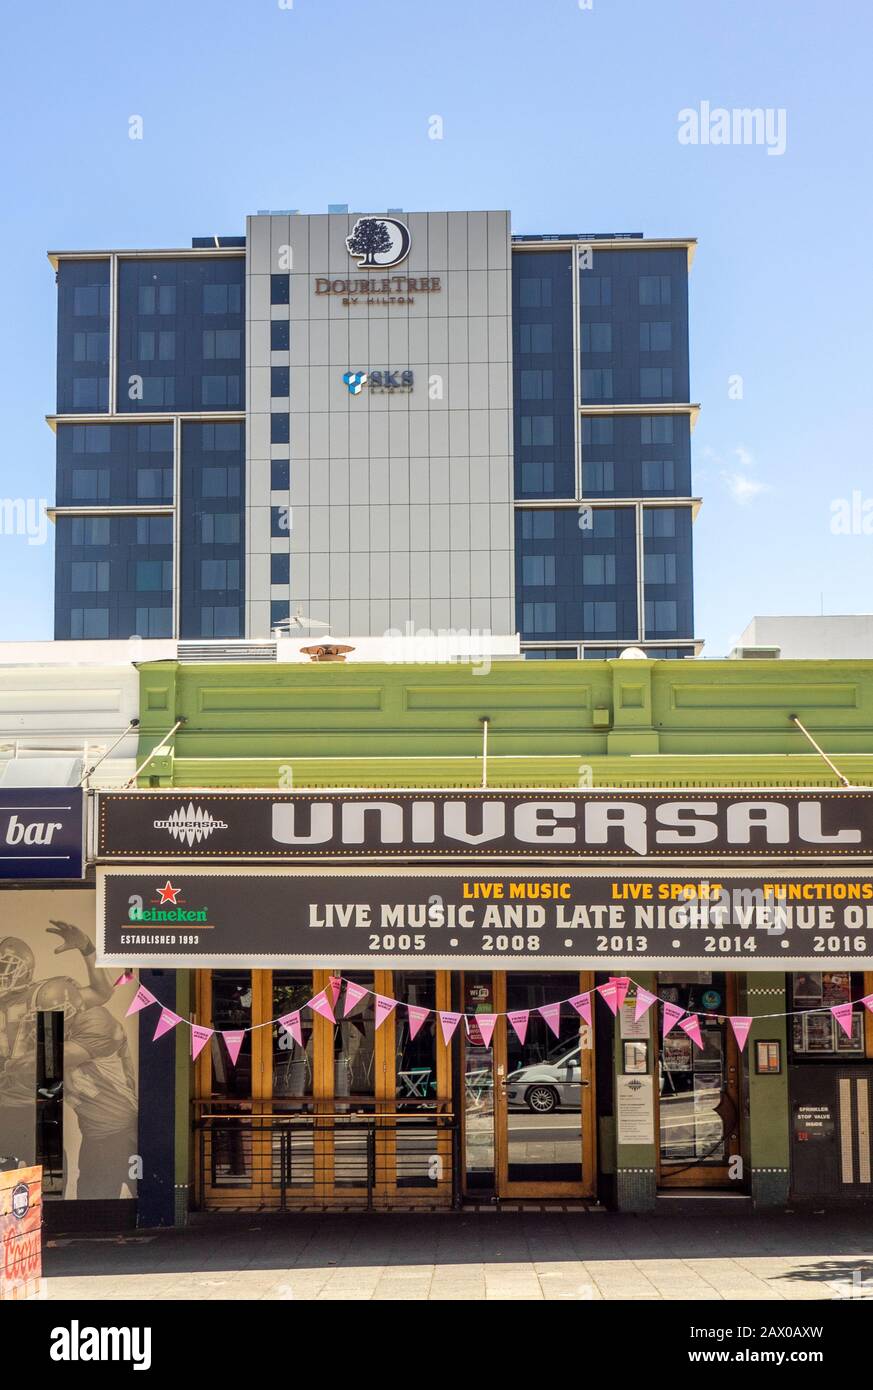 Universal Bar on William Street and Double Tree by Hilton Hotel Northbridge Perth WA Australia. Stock Photo